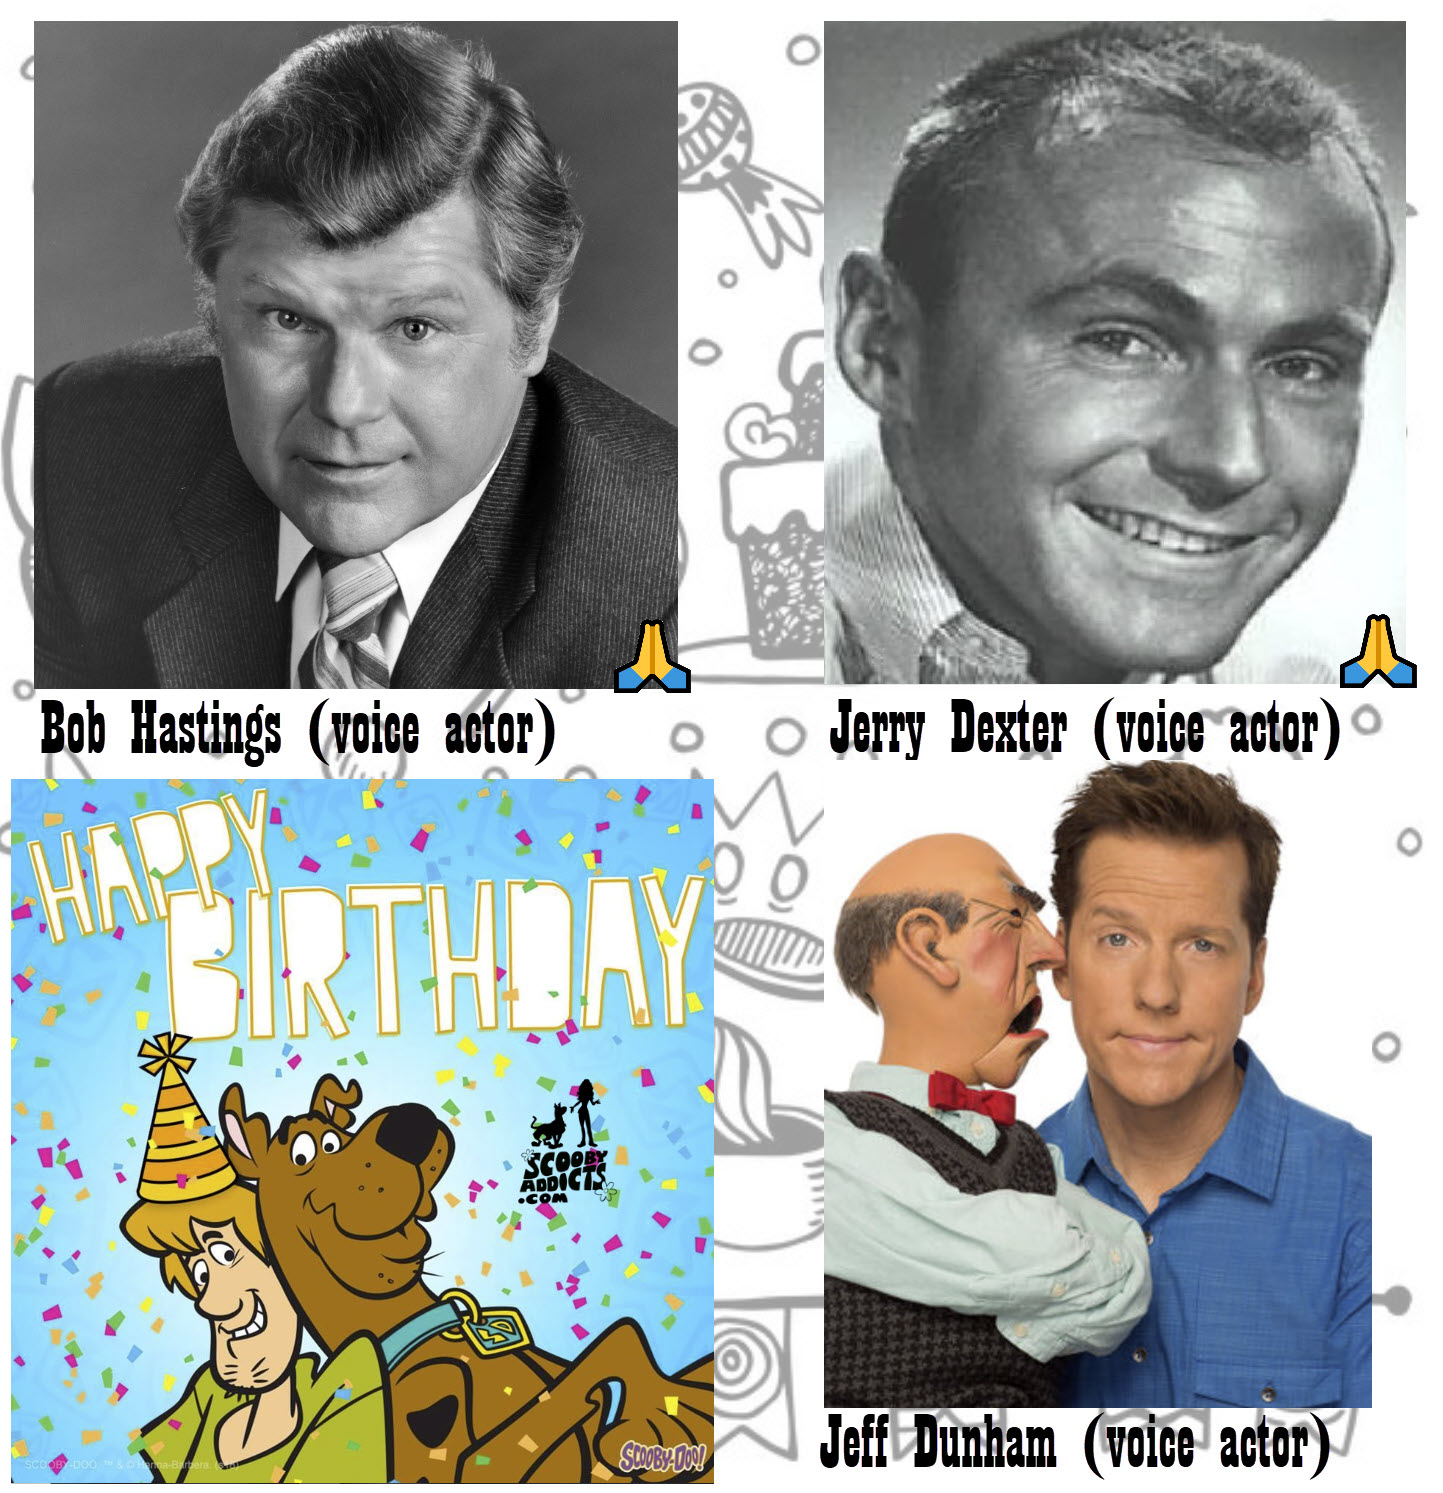 Birthdays - April 18 HAPPY BIRTHDAY Bob Hastings
Jerry Dexter
Jeff Dunham 